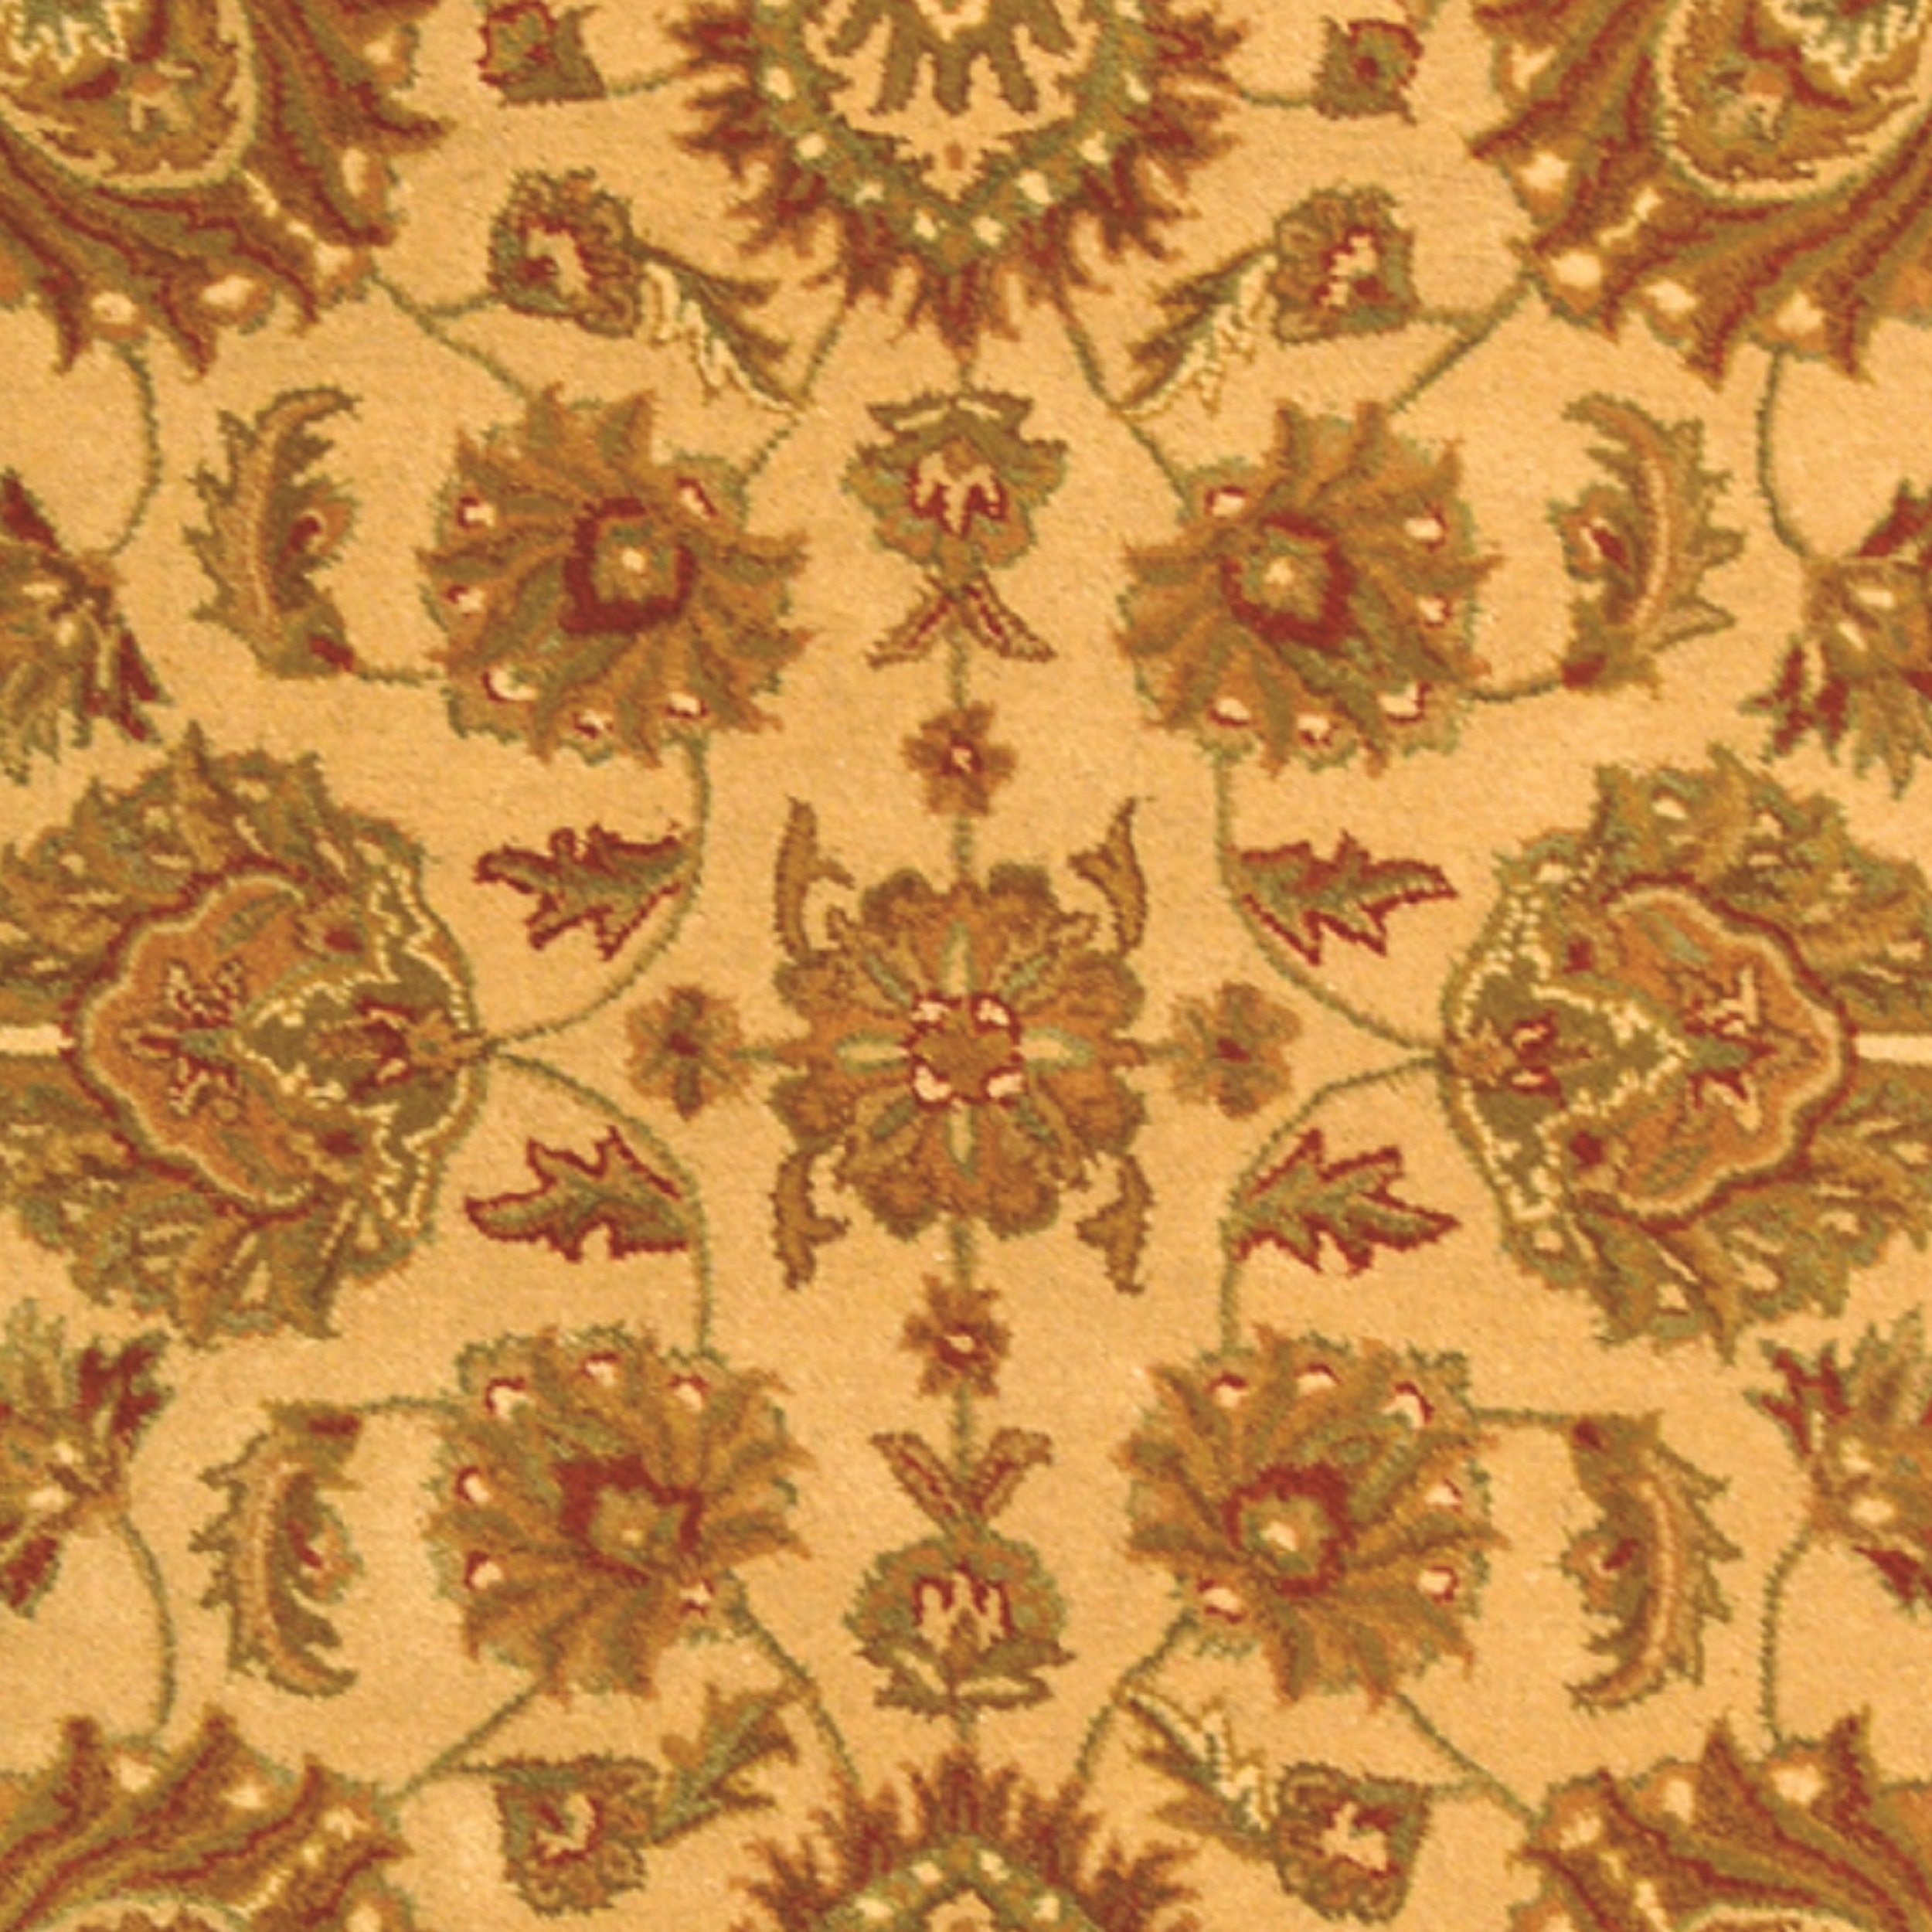 SAFAVIEH Heritage Regis Traditional Wool Area Rug, Ivory/Brown, 2' x 3' - image 3 of 4